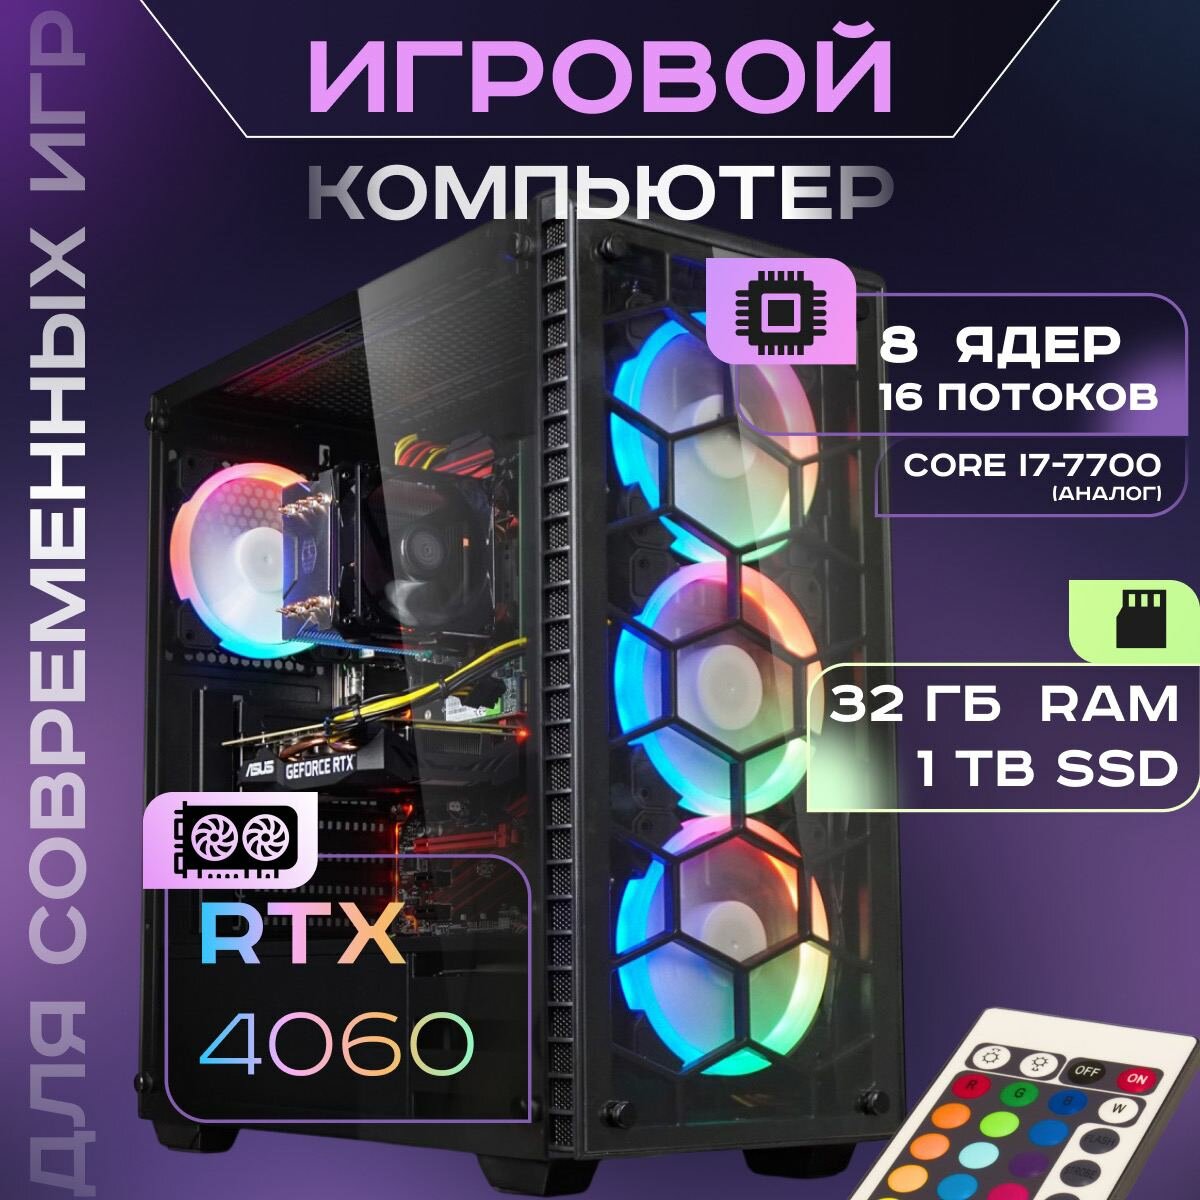 Игровой компьютер Core i7-7700 (аналог) RTX 4060 RAM 32 GB SSD 1TB